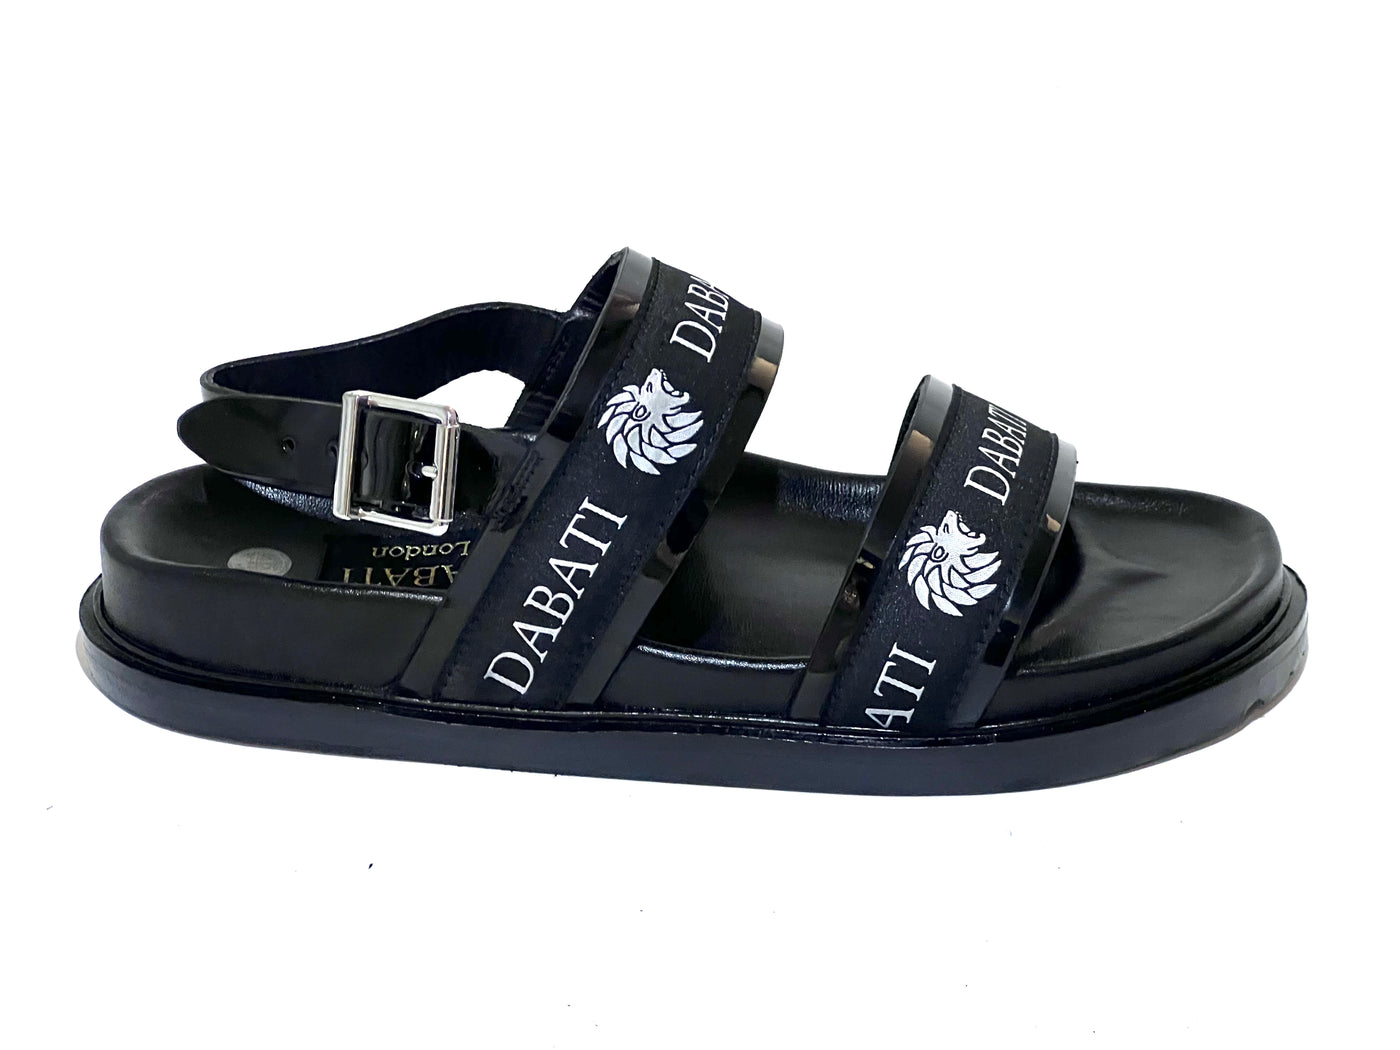 Dabati black and white  cross strap 100% wetloose leather sandals